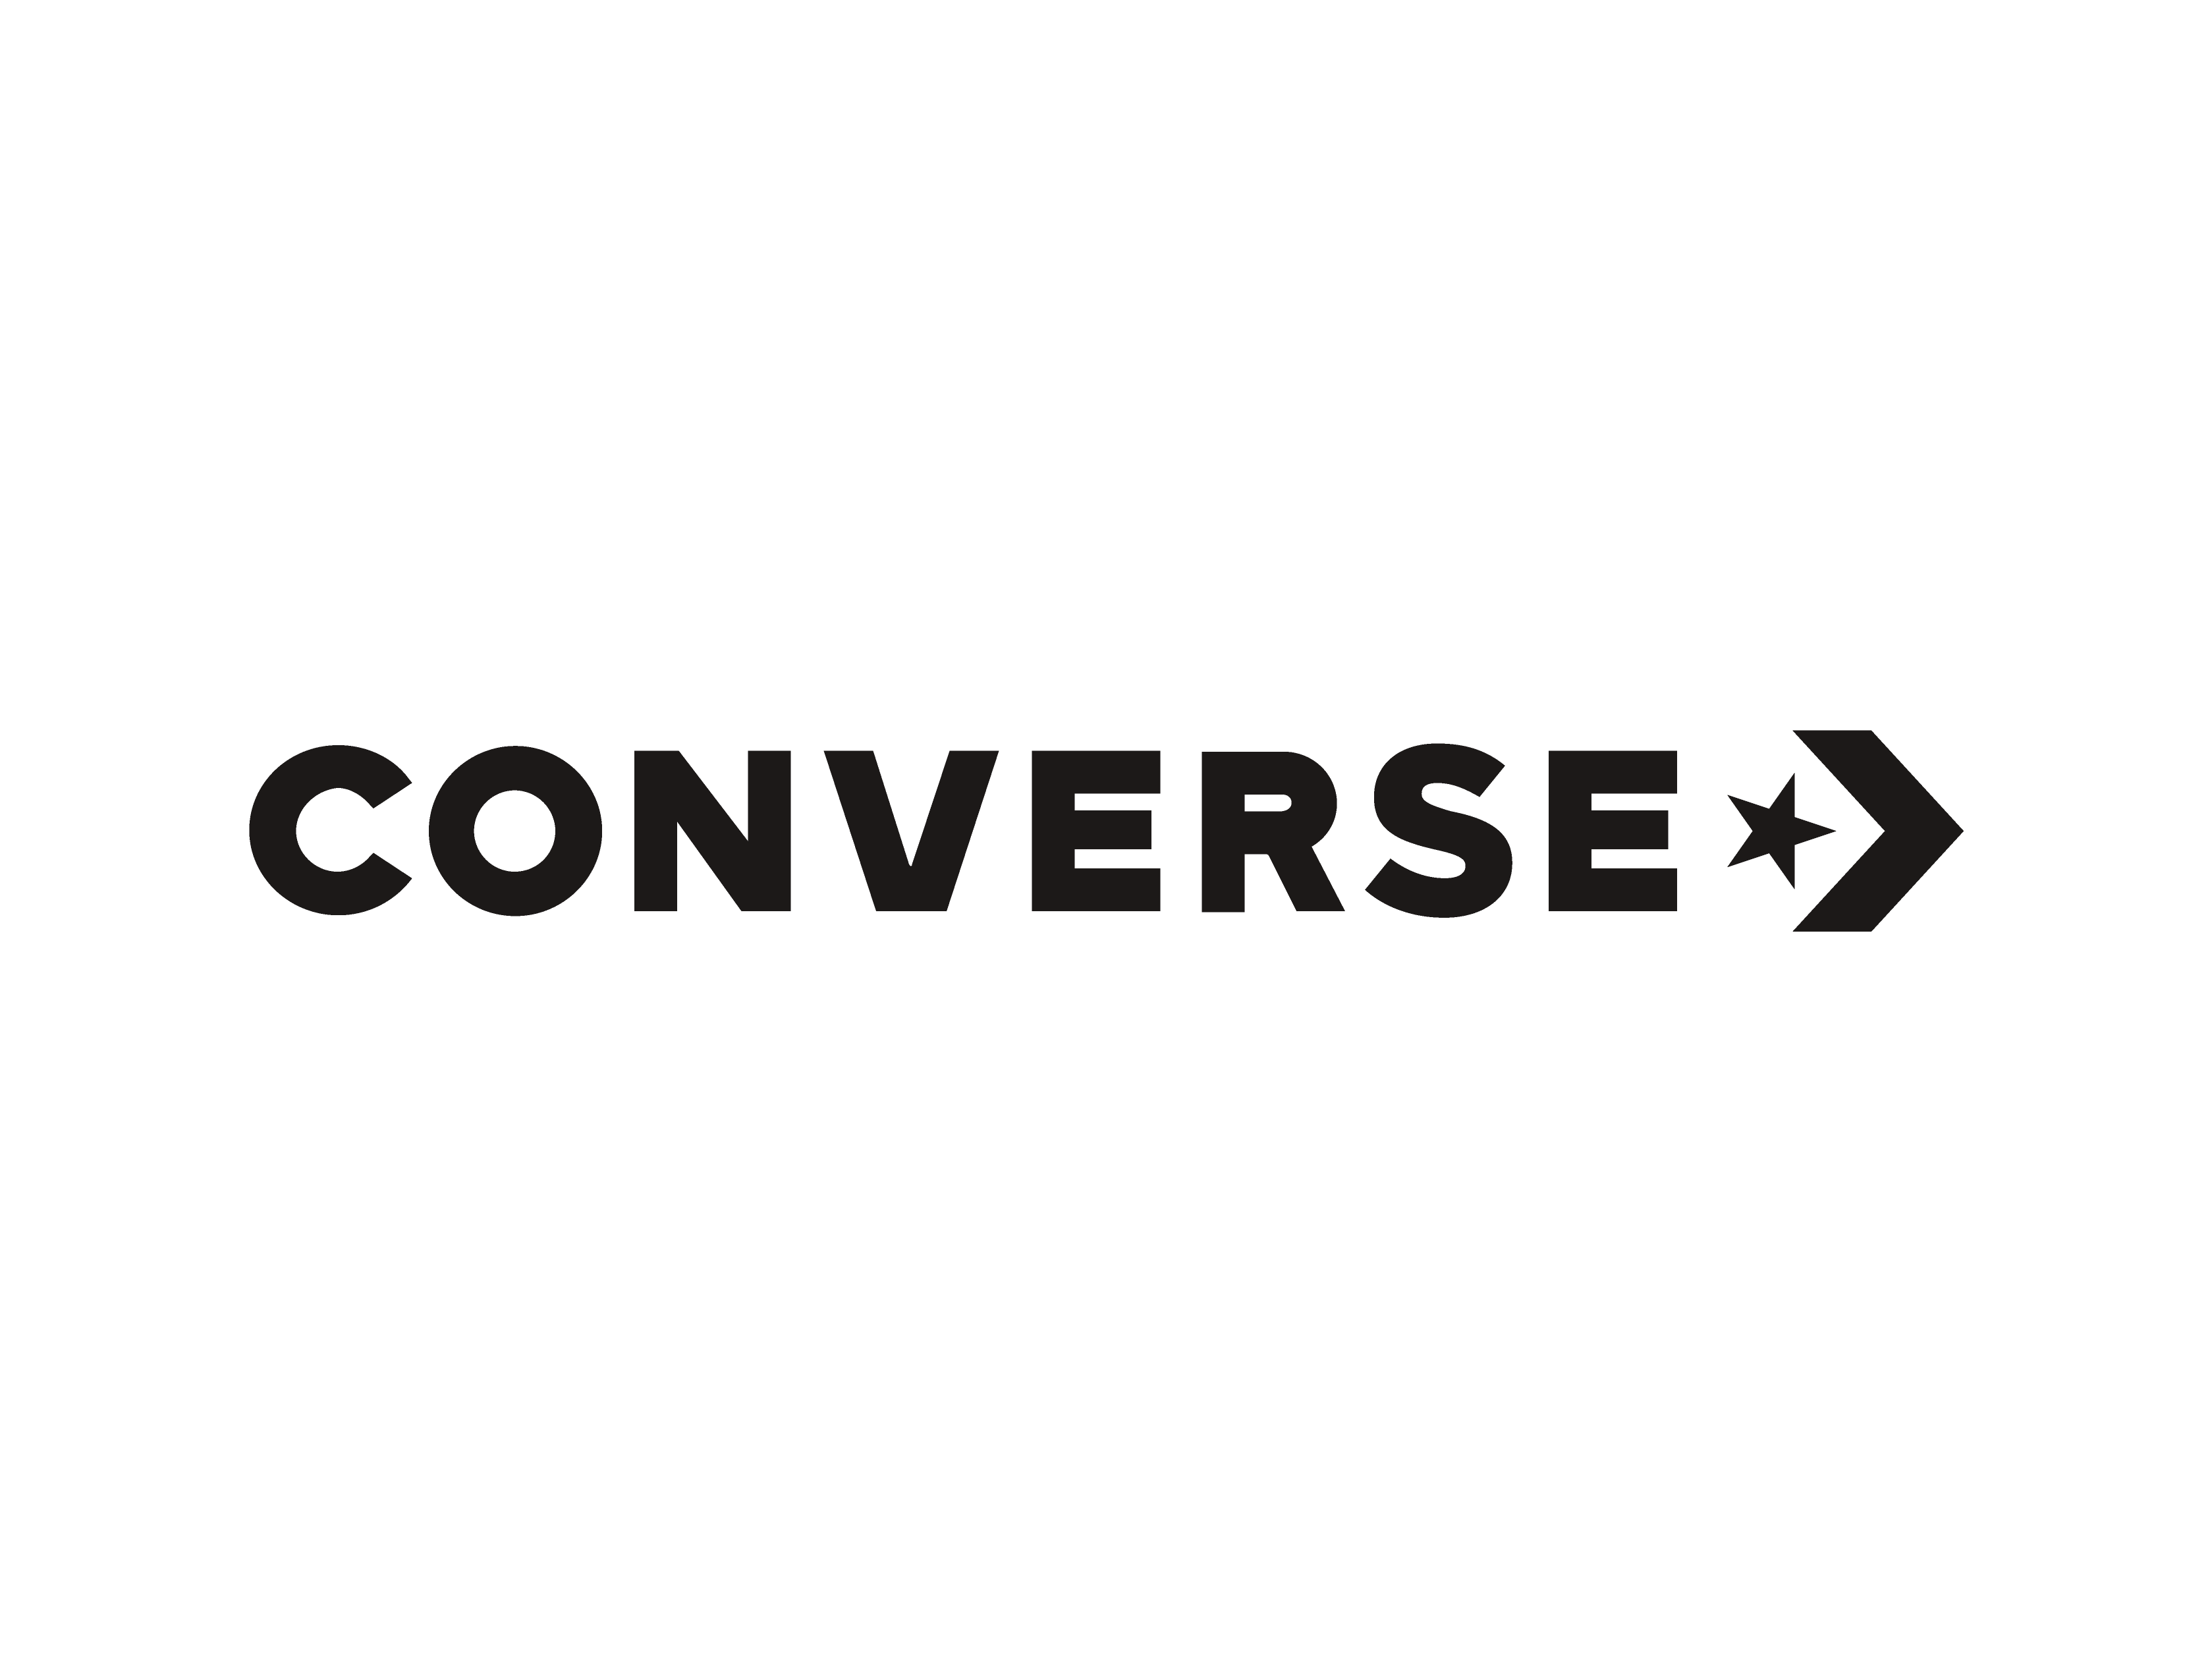 Converse New